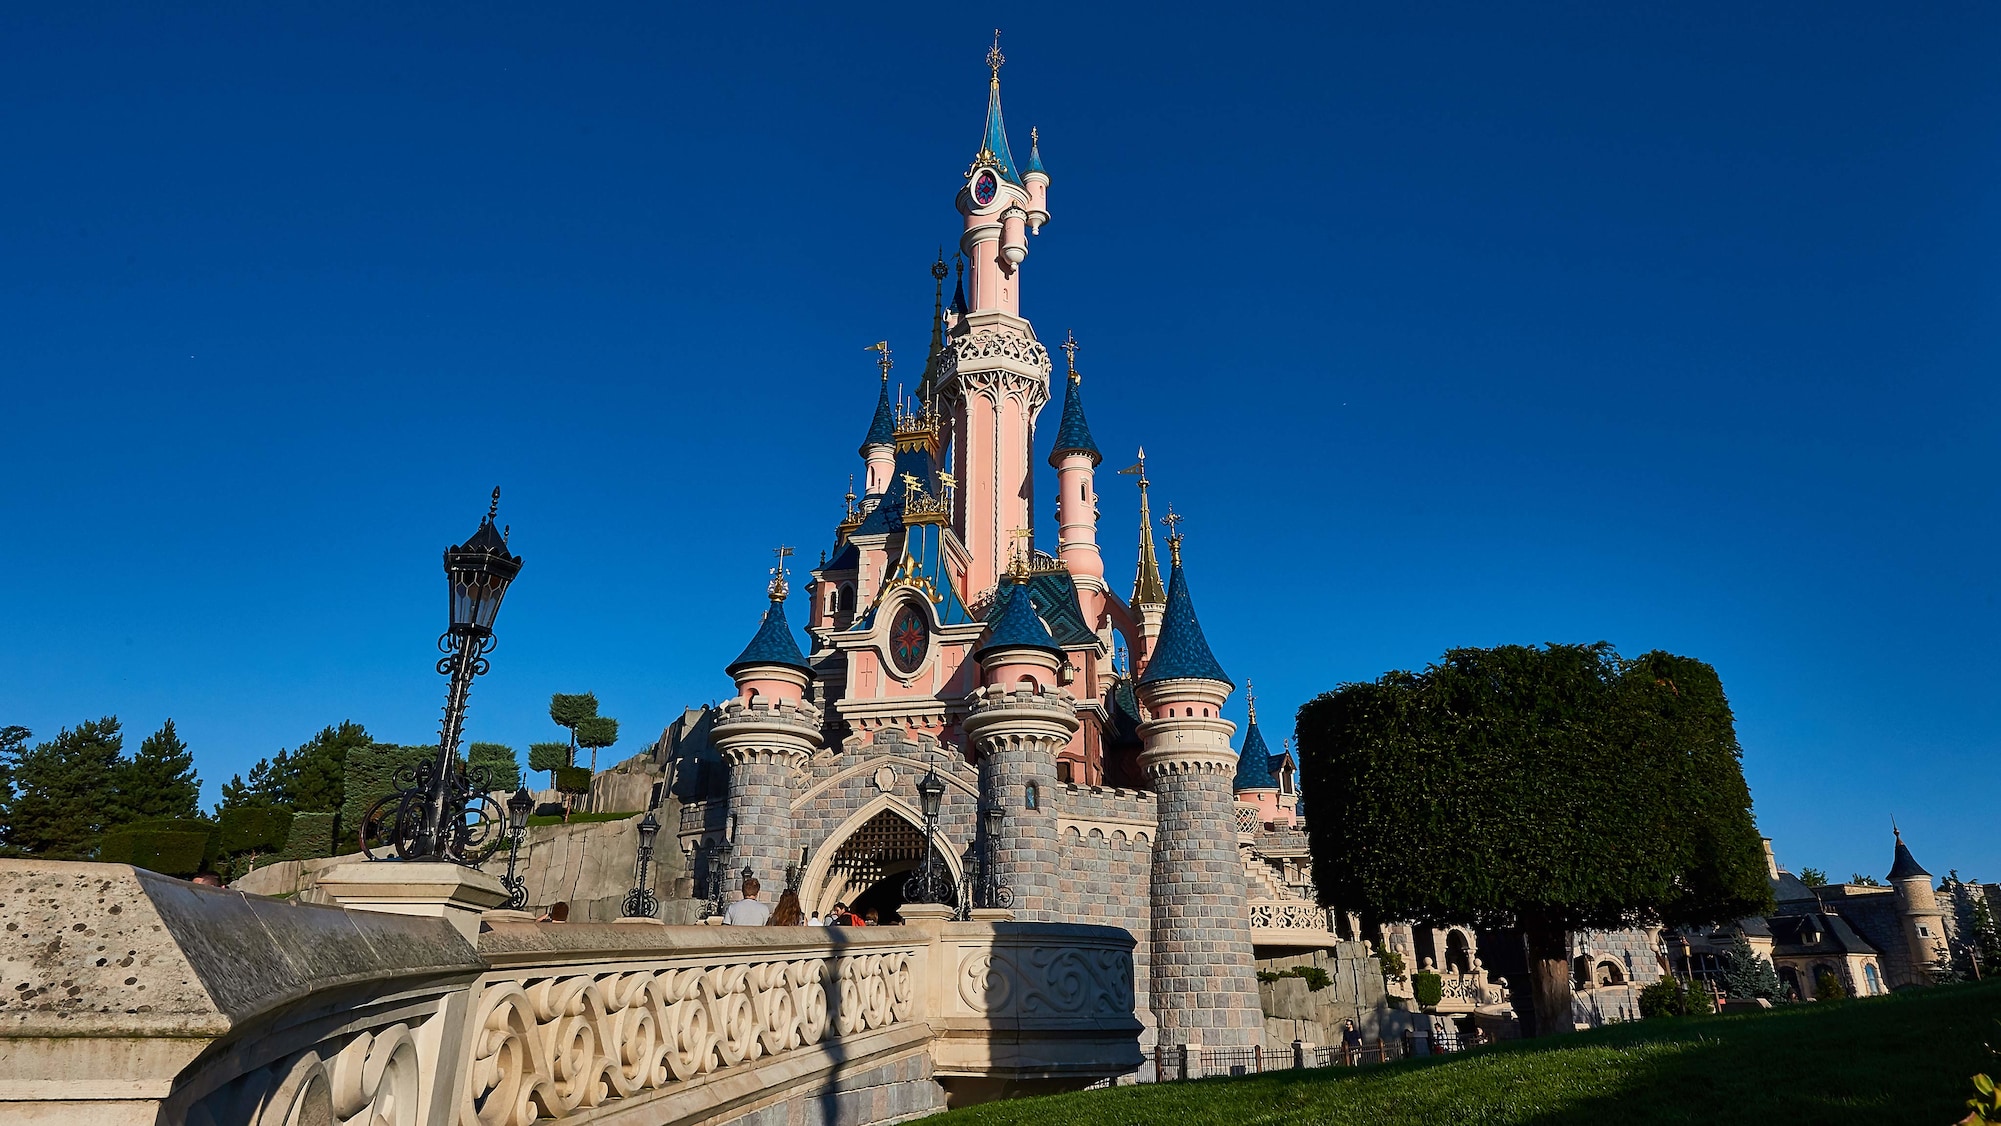 Sleeping Beauty Castle | Disneyland Paris Attractions